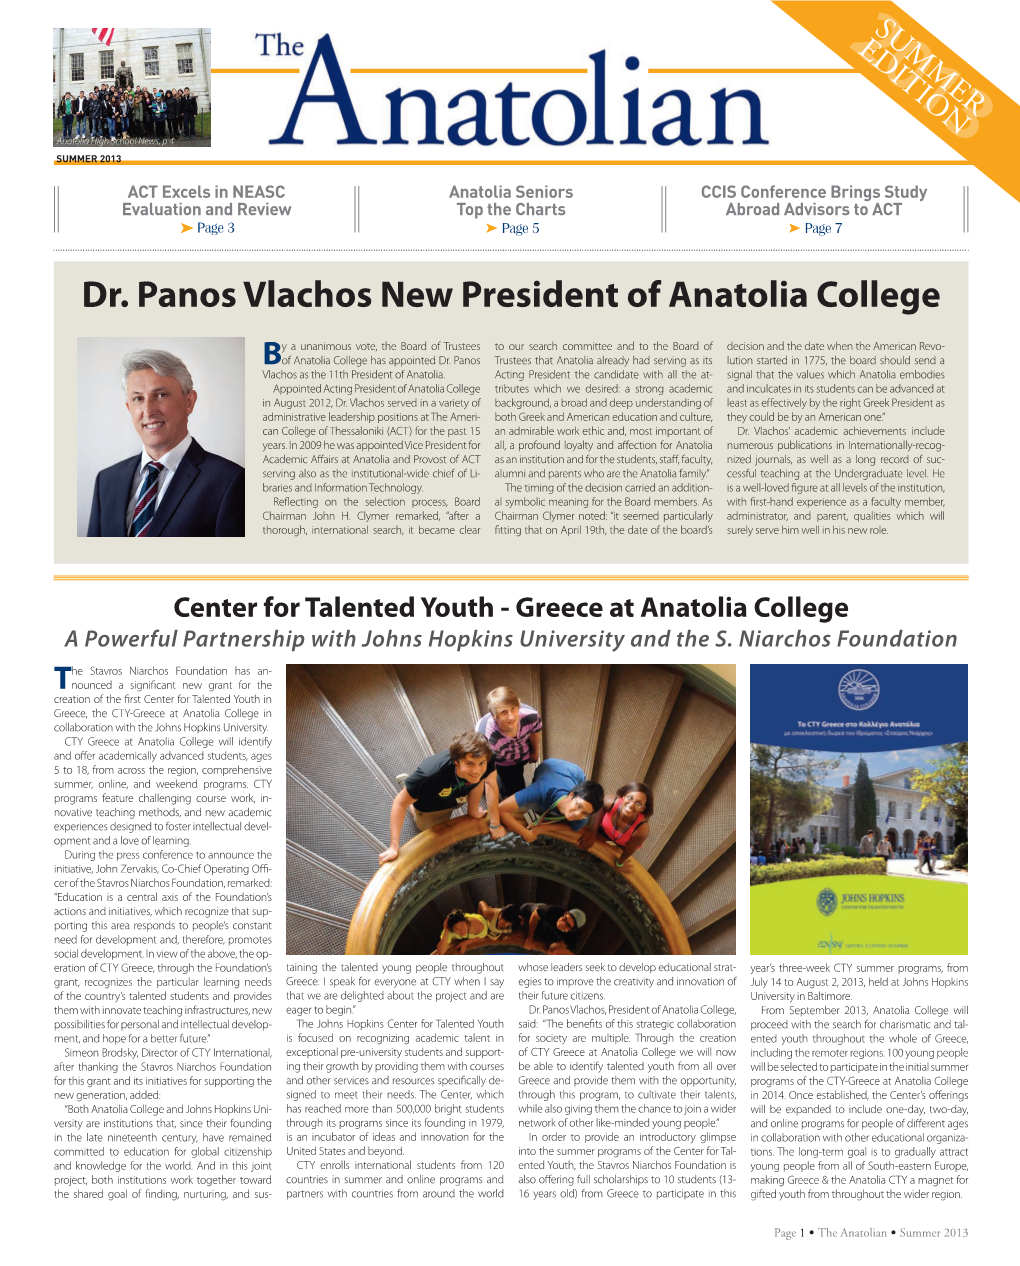 Dr. Panos Vlachos New President of Anatolia College